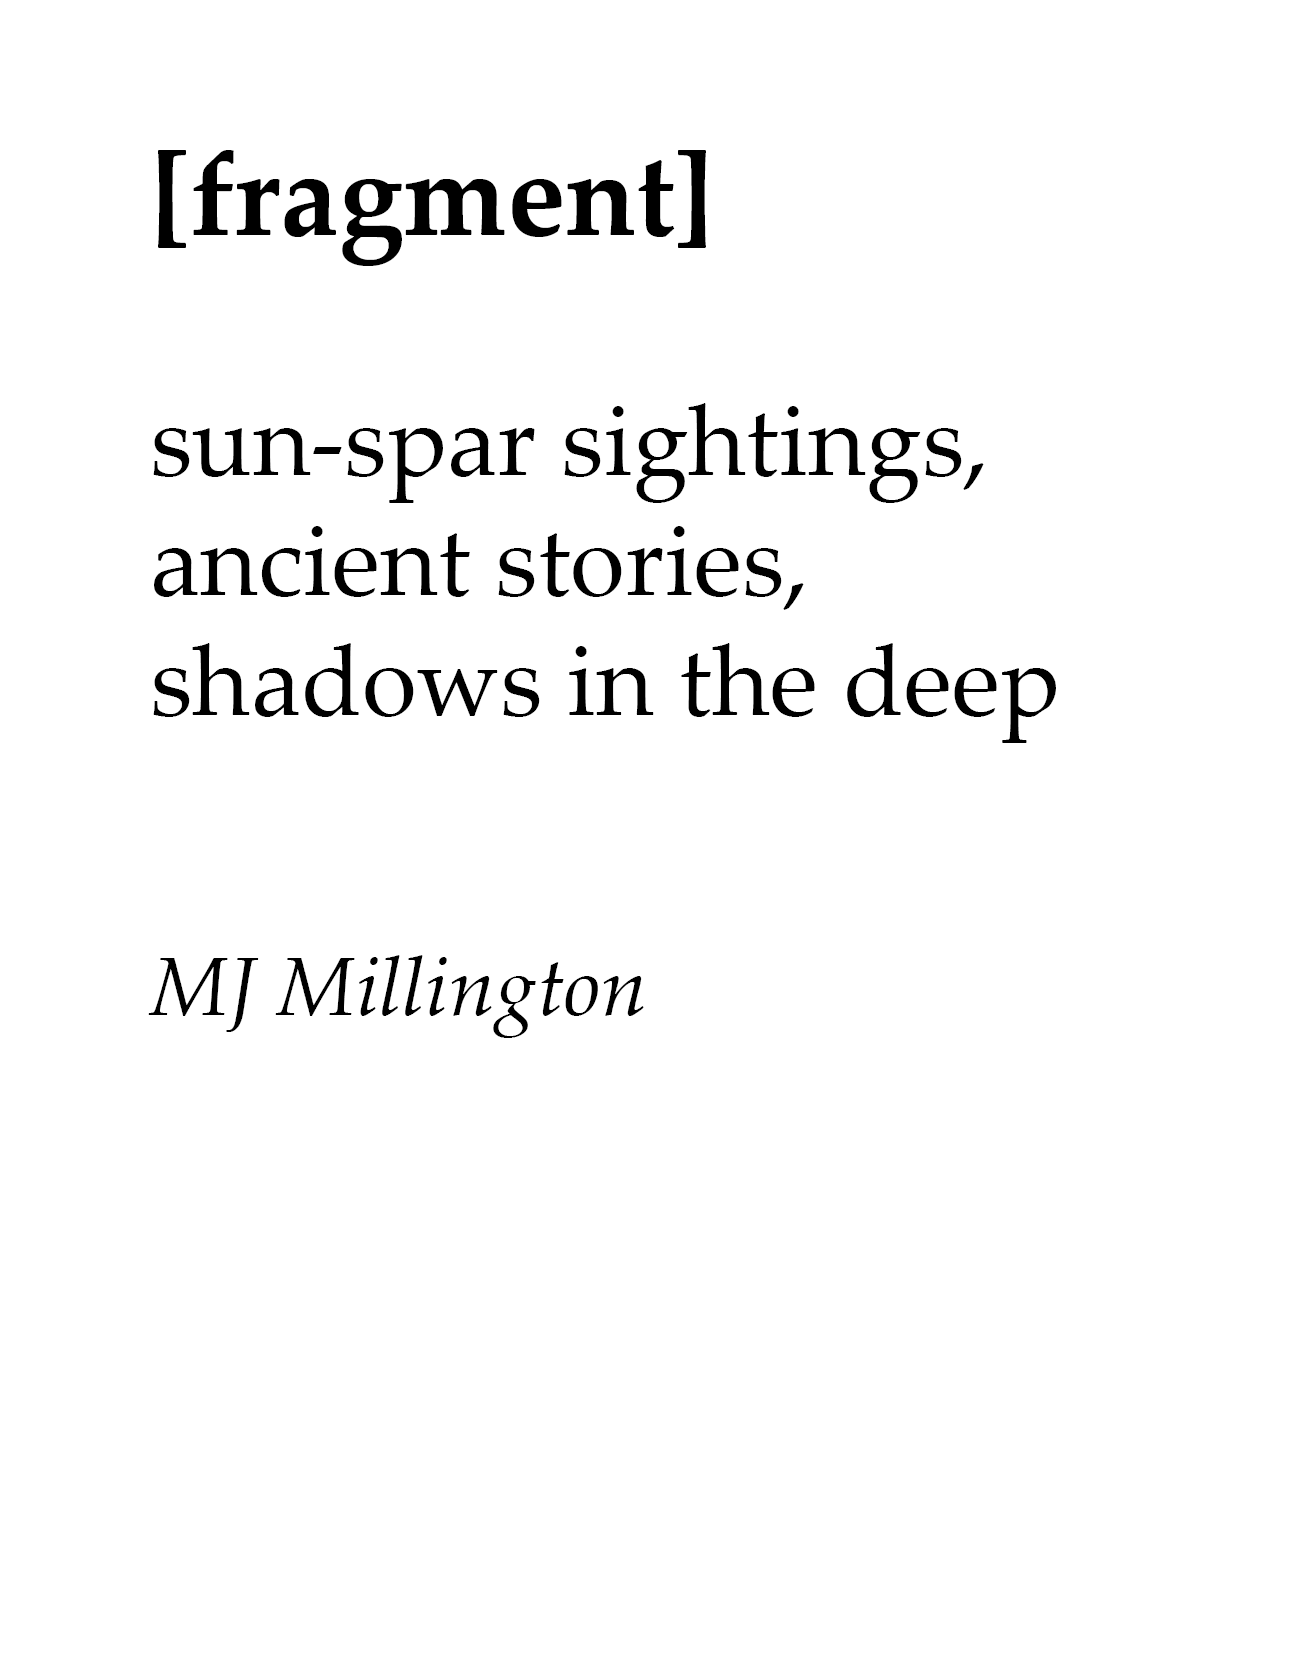 Ostrakon poem fragments5.png